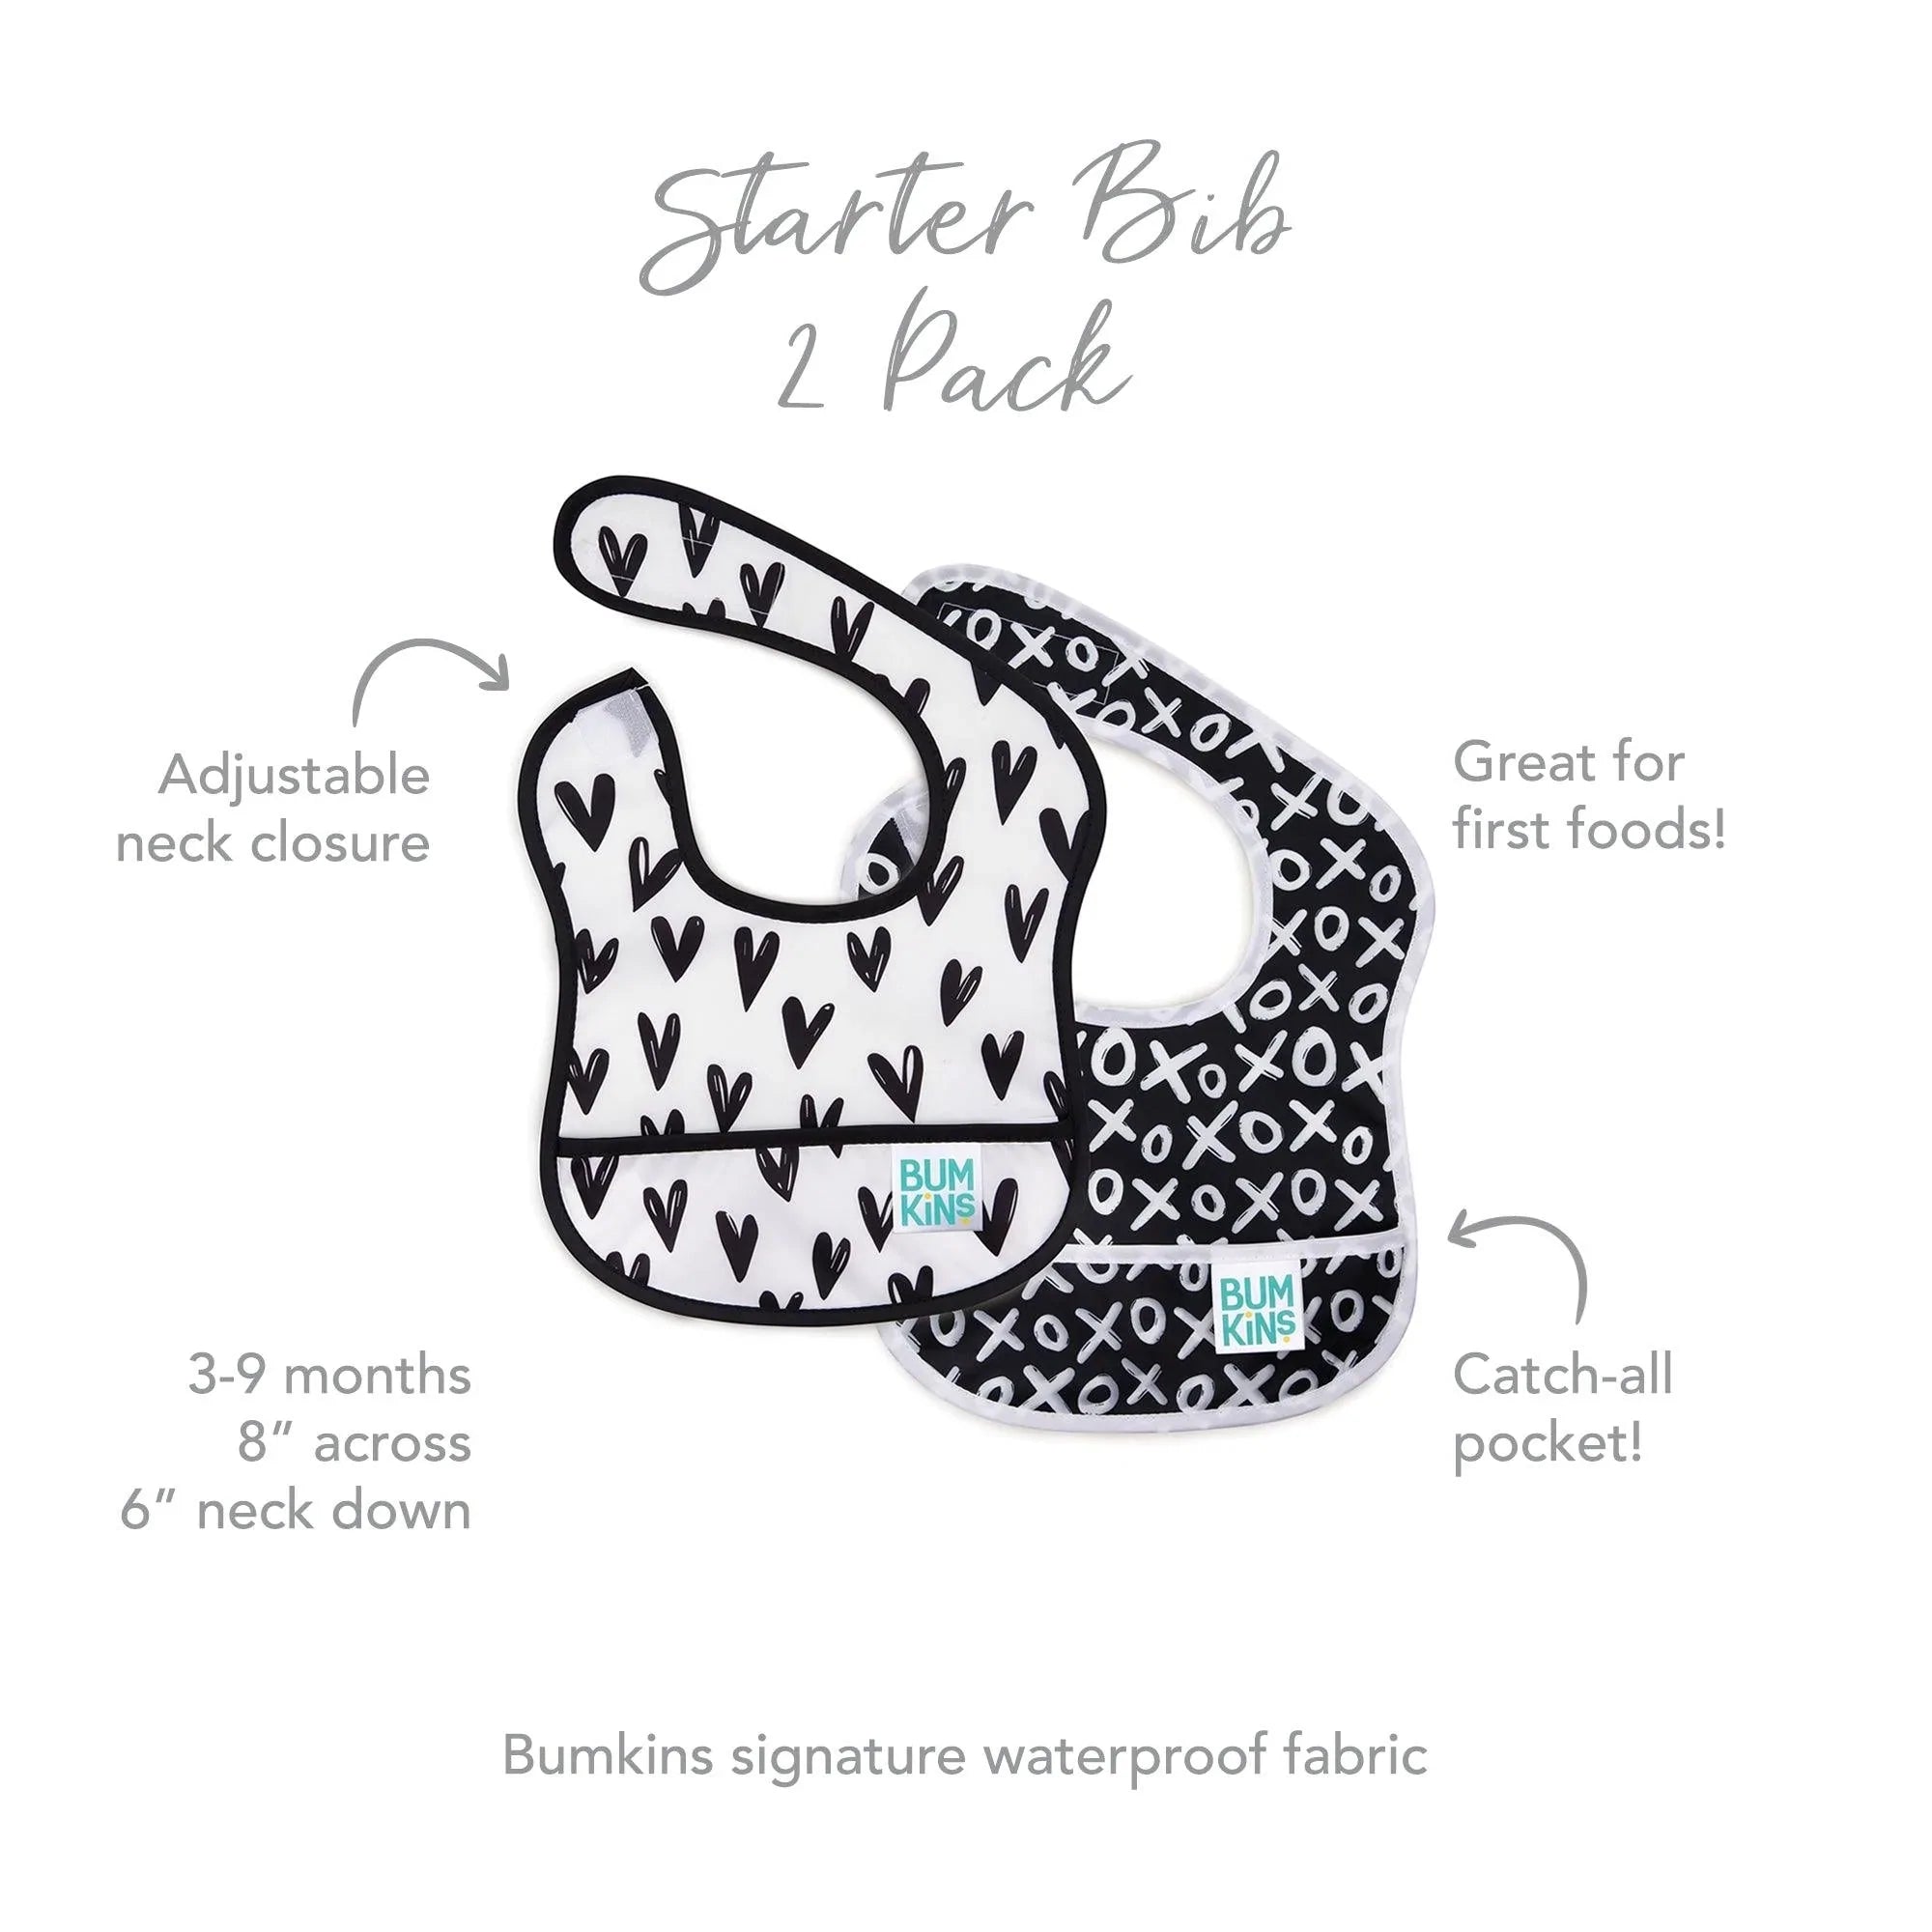 Starter Bib 2 Pack: XOXO & Hearts - Bumkins